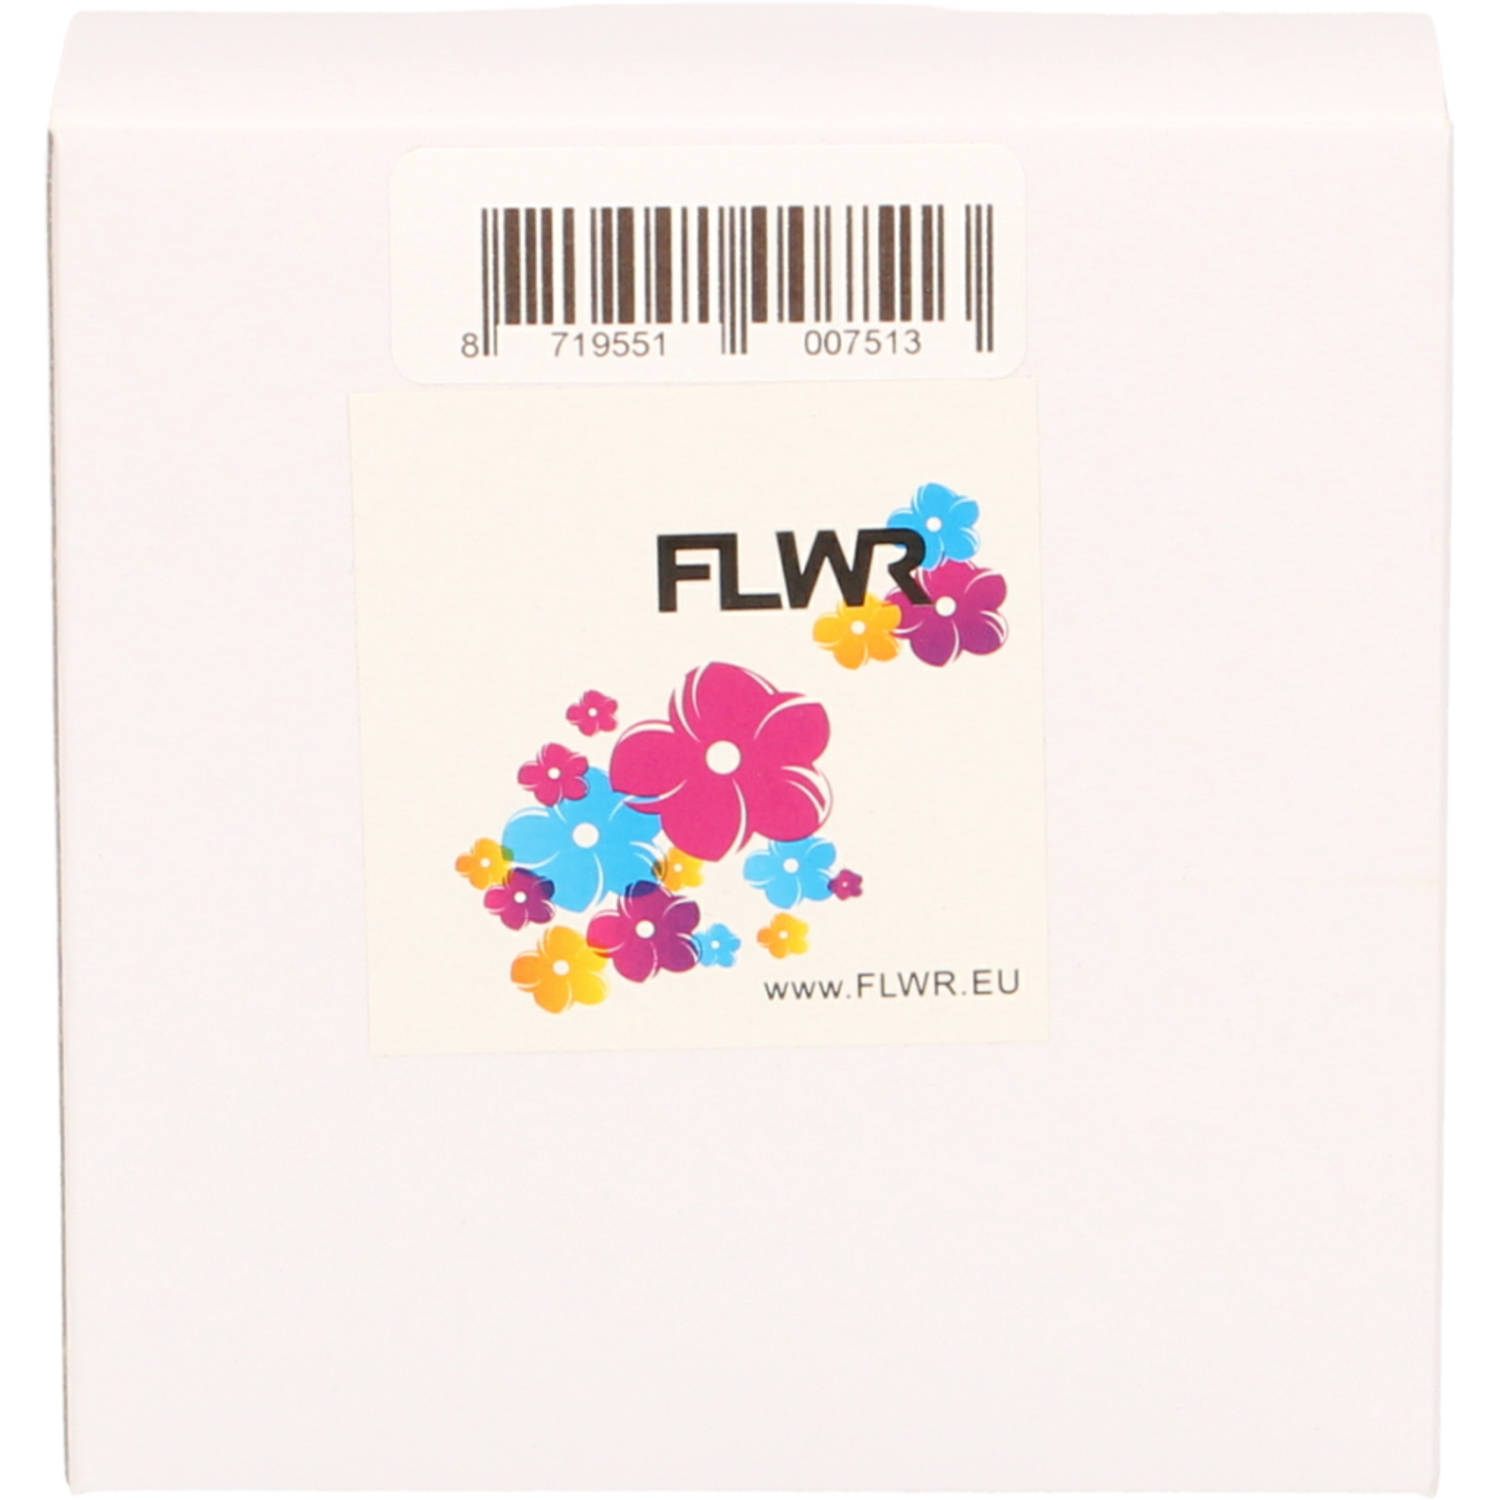 FLWR Brother DK-11204 17 mm x 54 mm wit labels